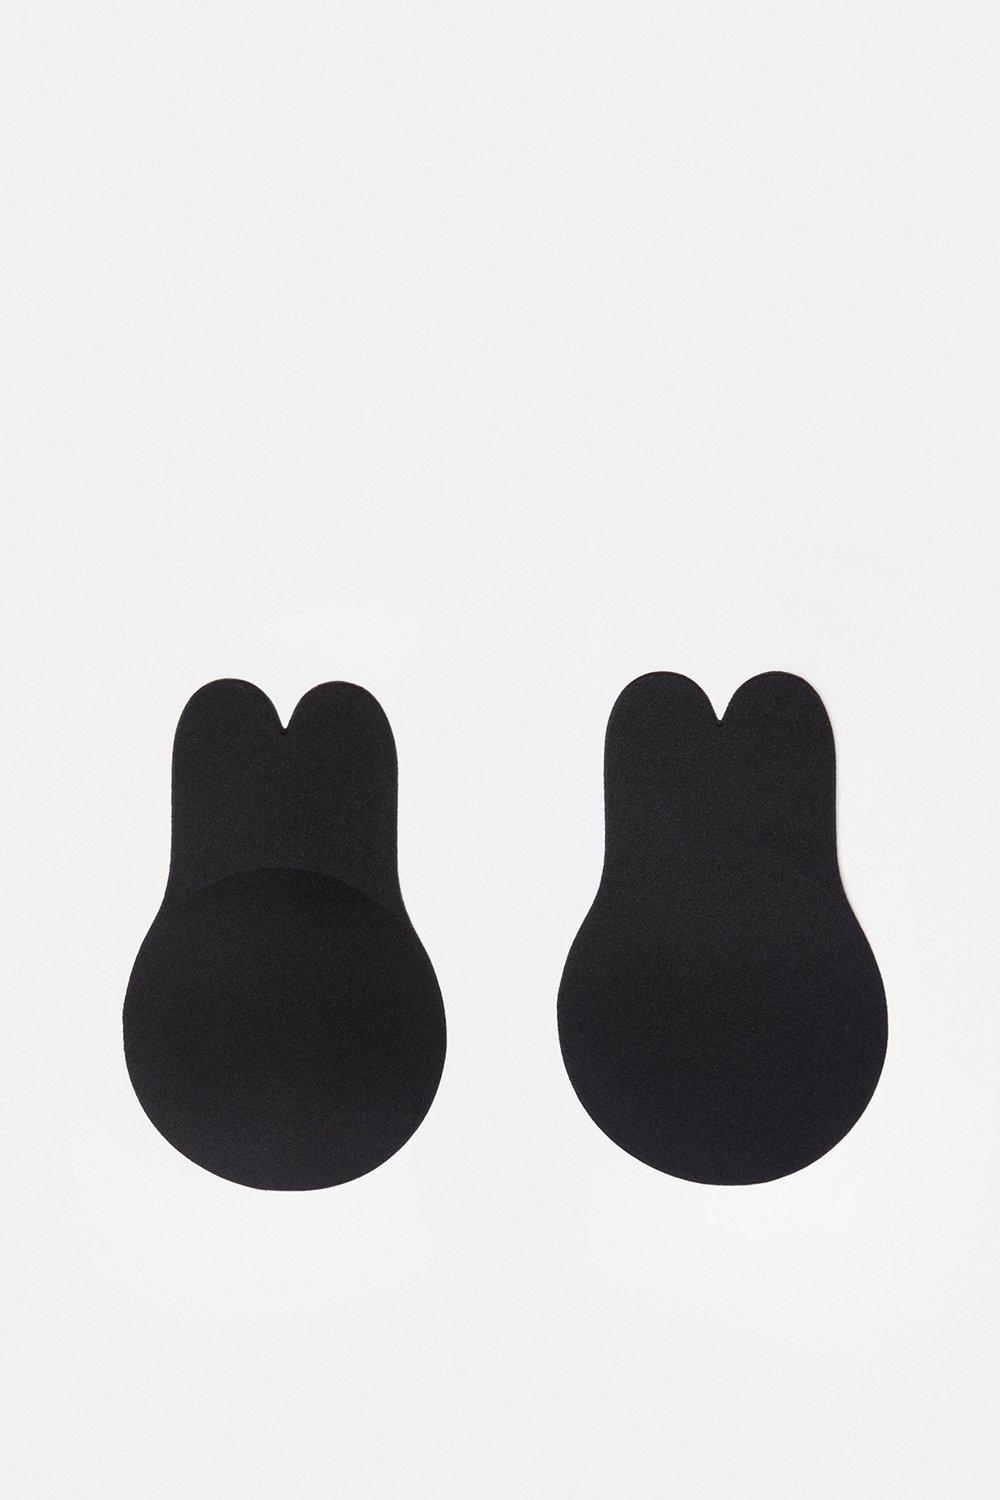 KarenMillen Women's Rabbit Breast Lift Nipple Cover|Size: L|black